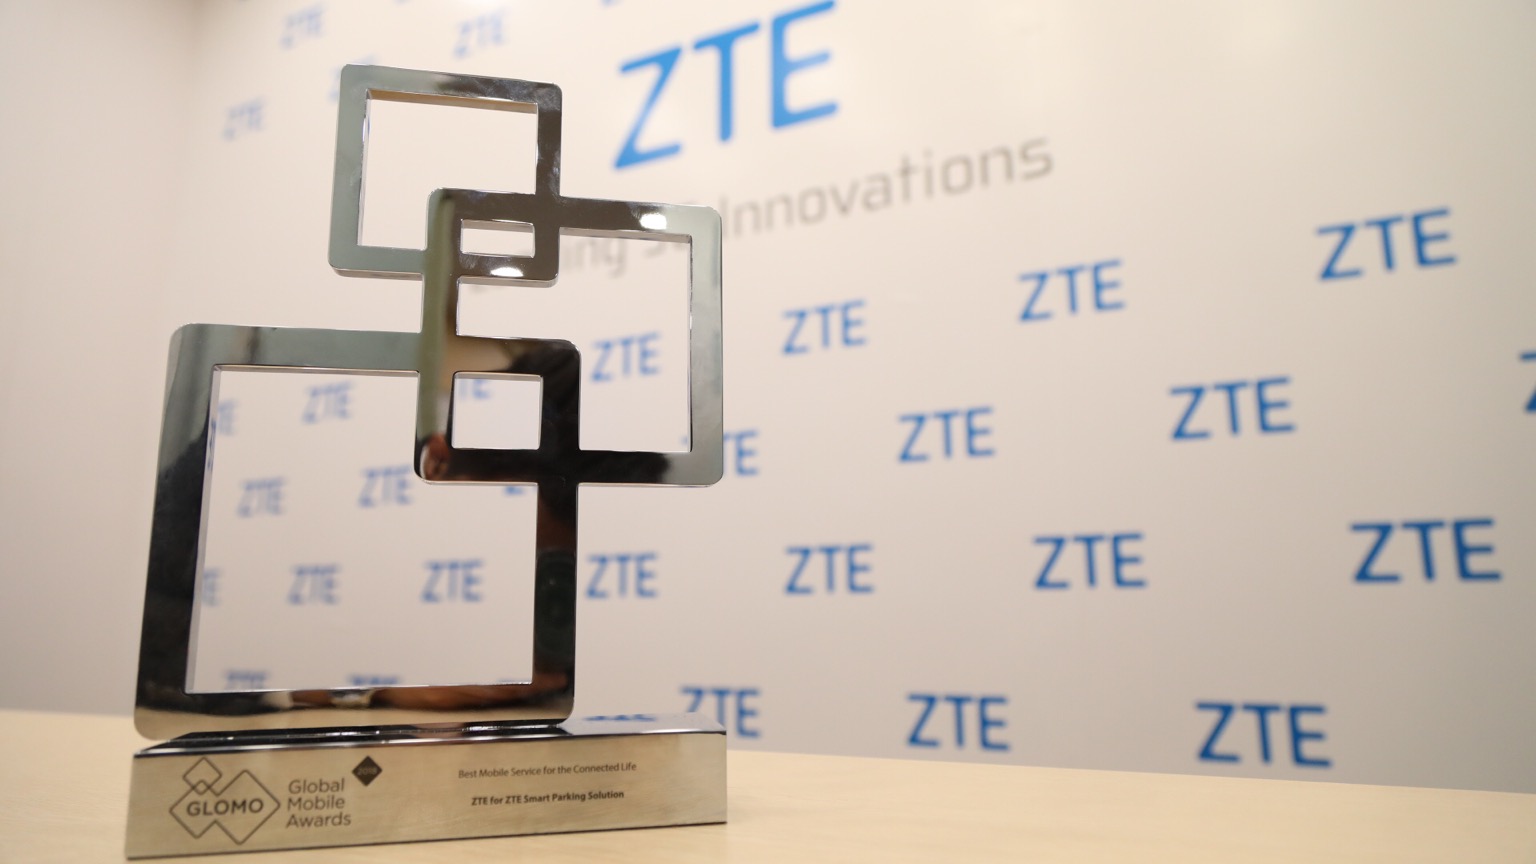 ZTE's innovative application NB-IoT 